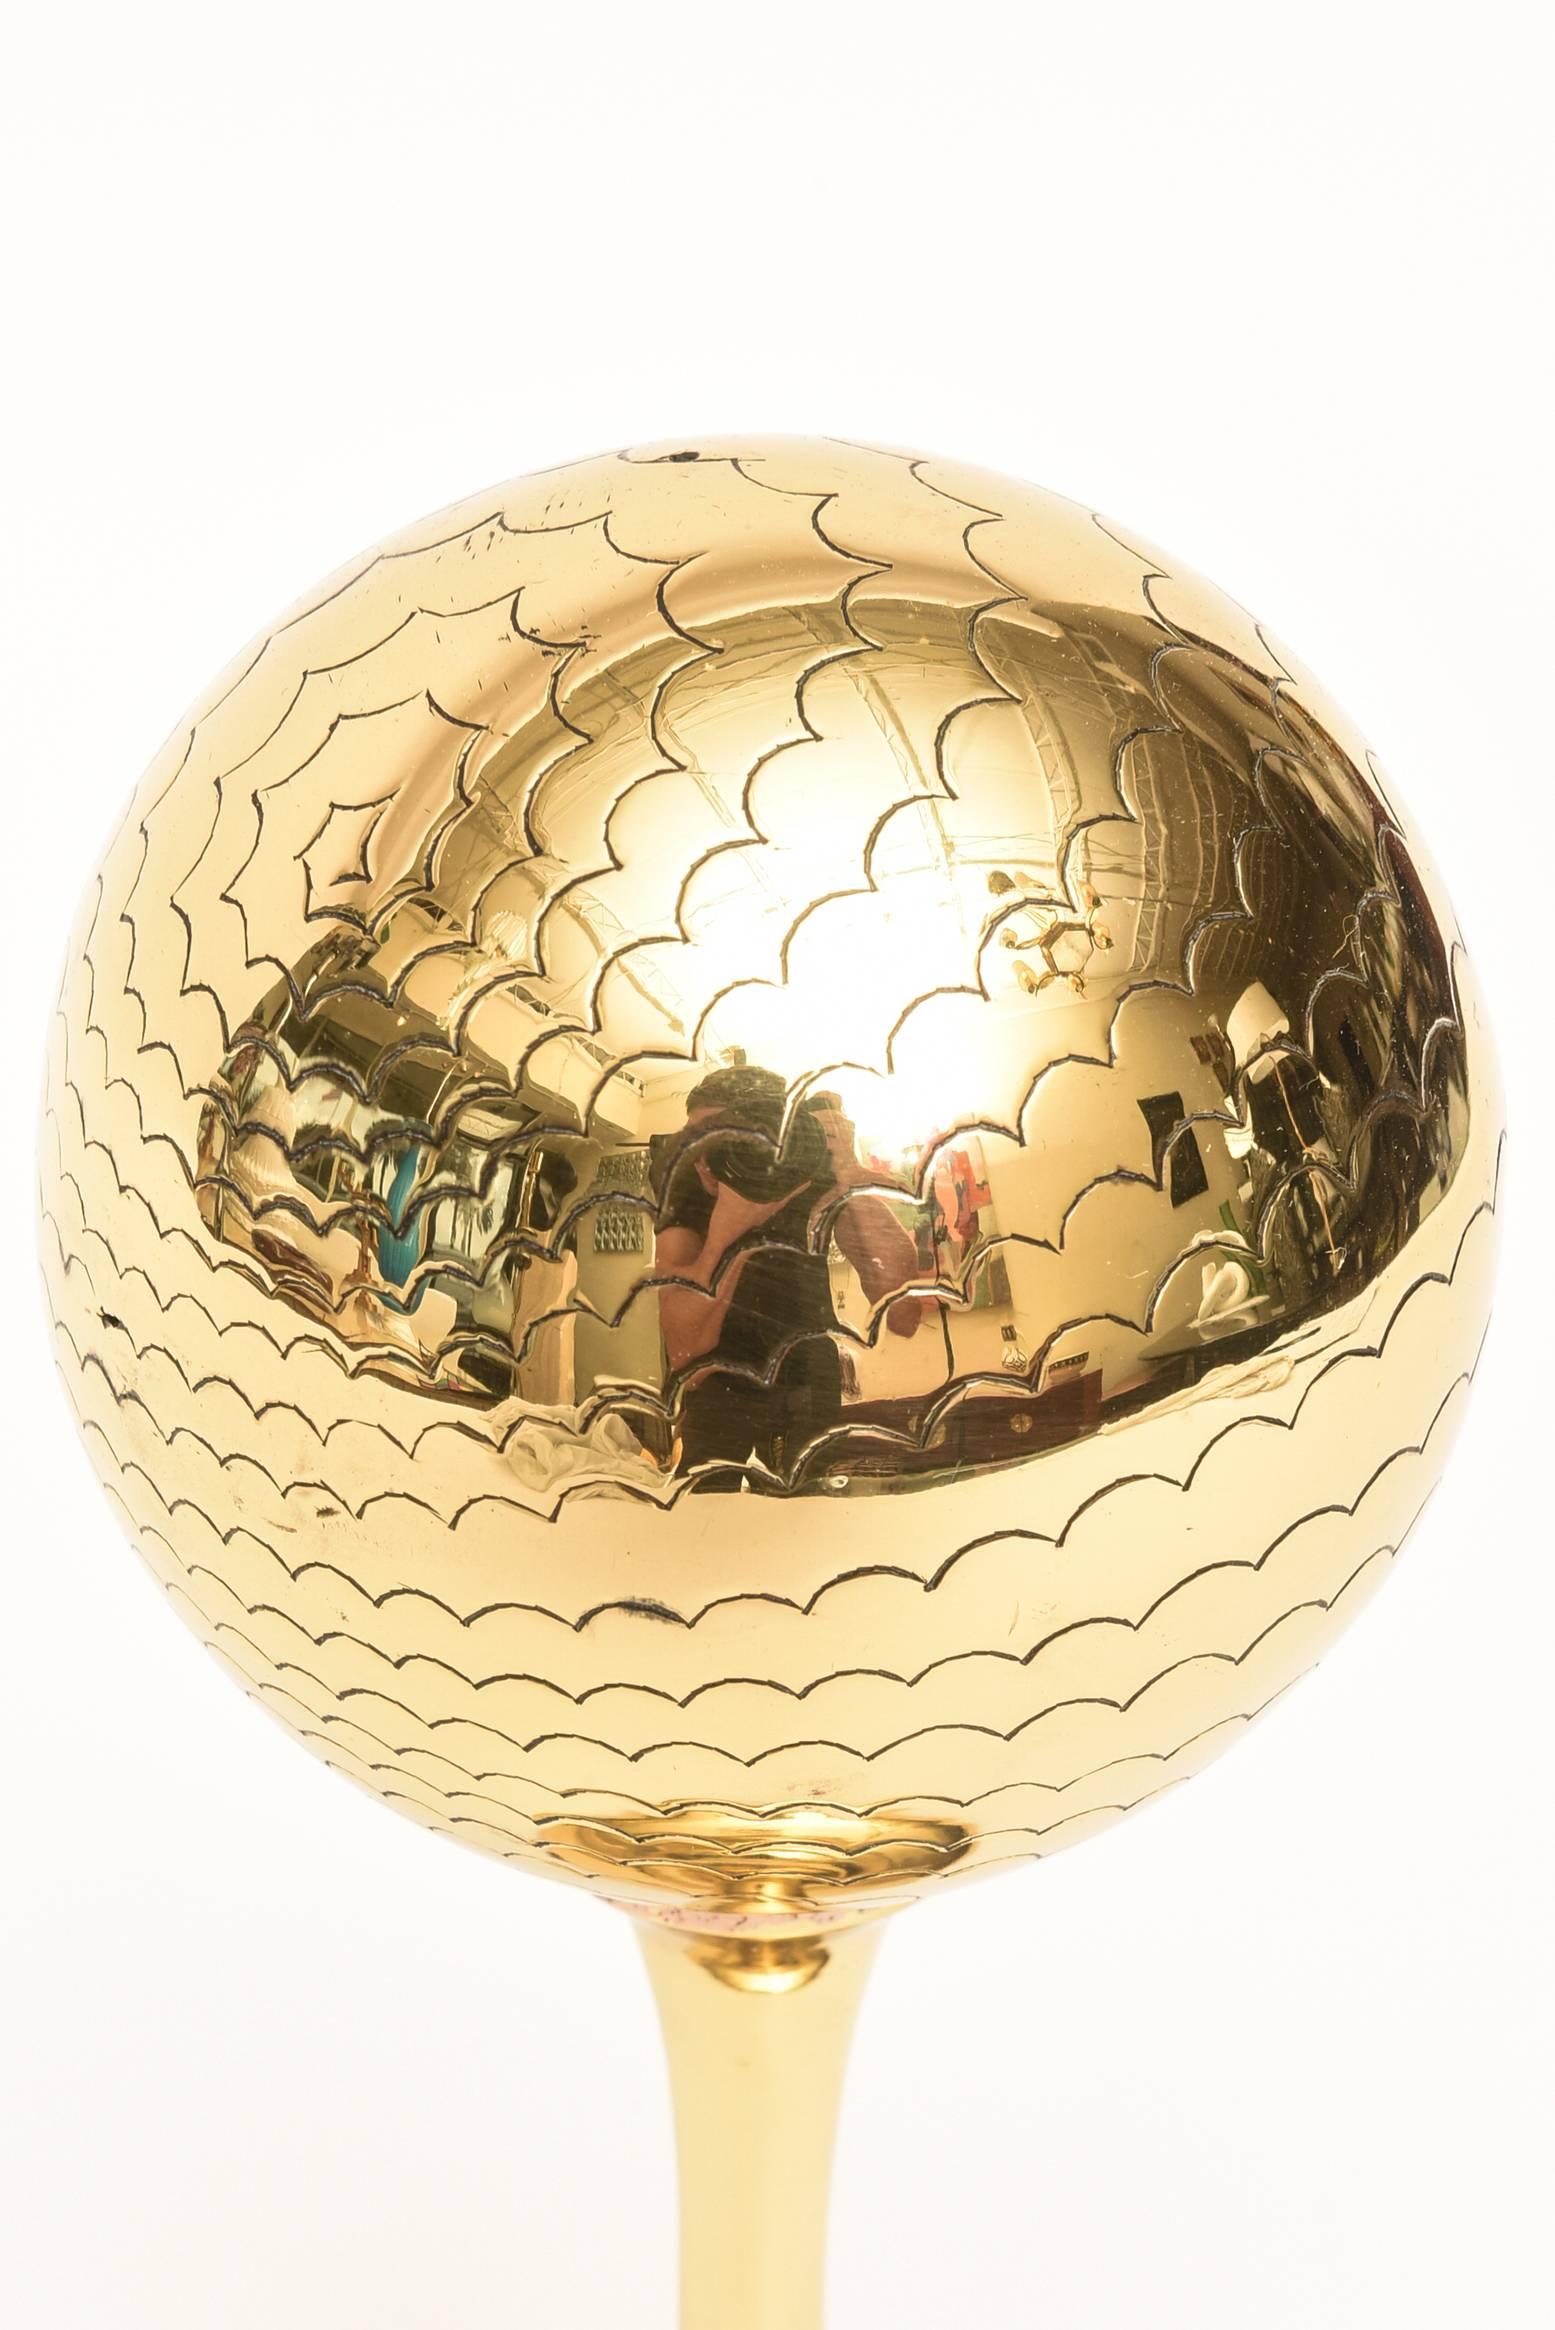 Brass Globe Sculpture or Object Mid-Century Modern Desk Accessory 5